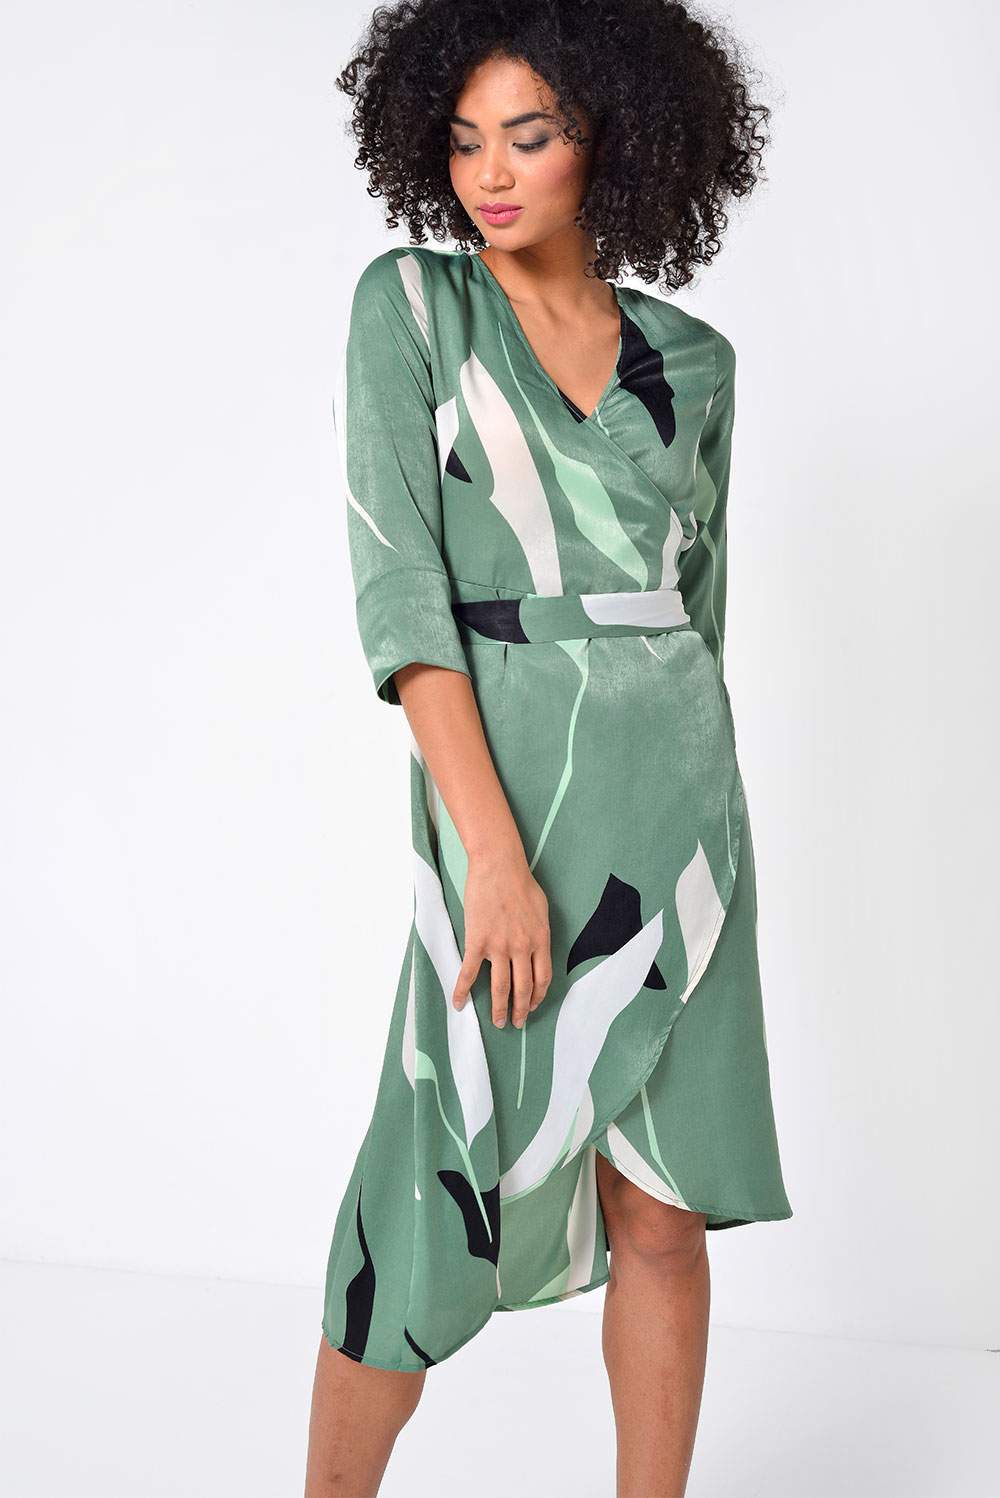 Vero Moda Laksmi Dress in Green - iCLOTHING